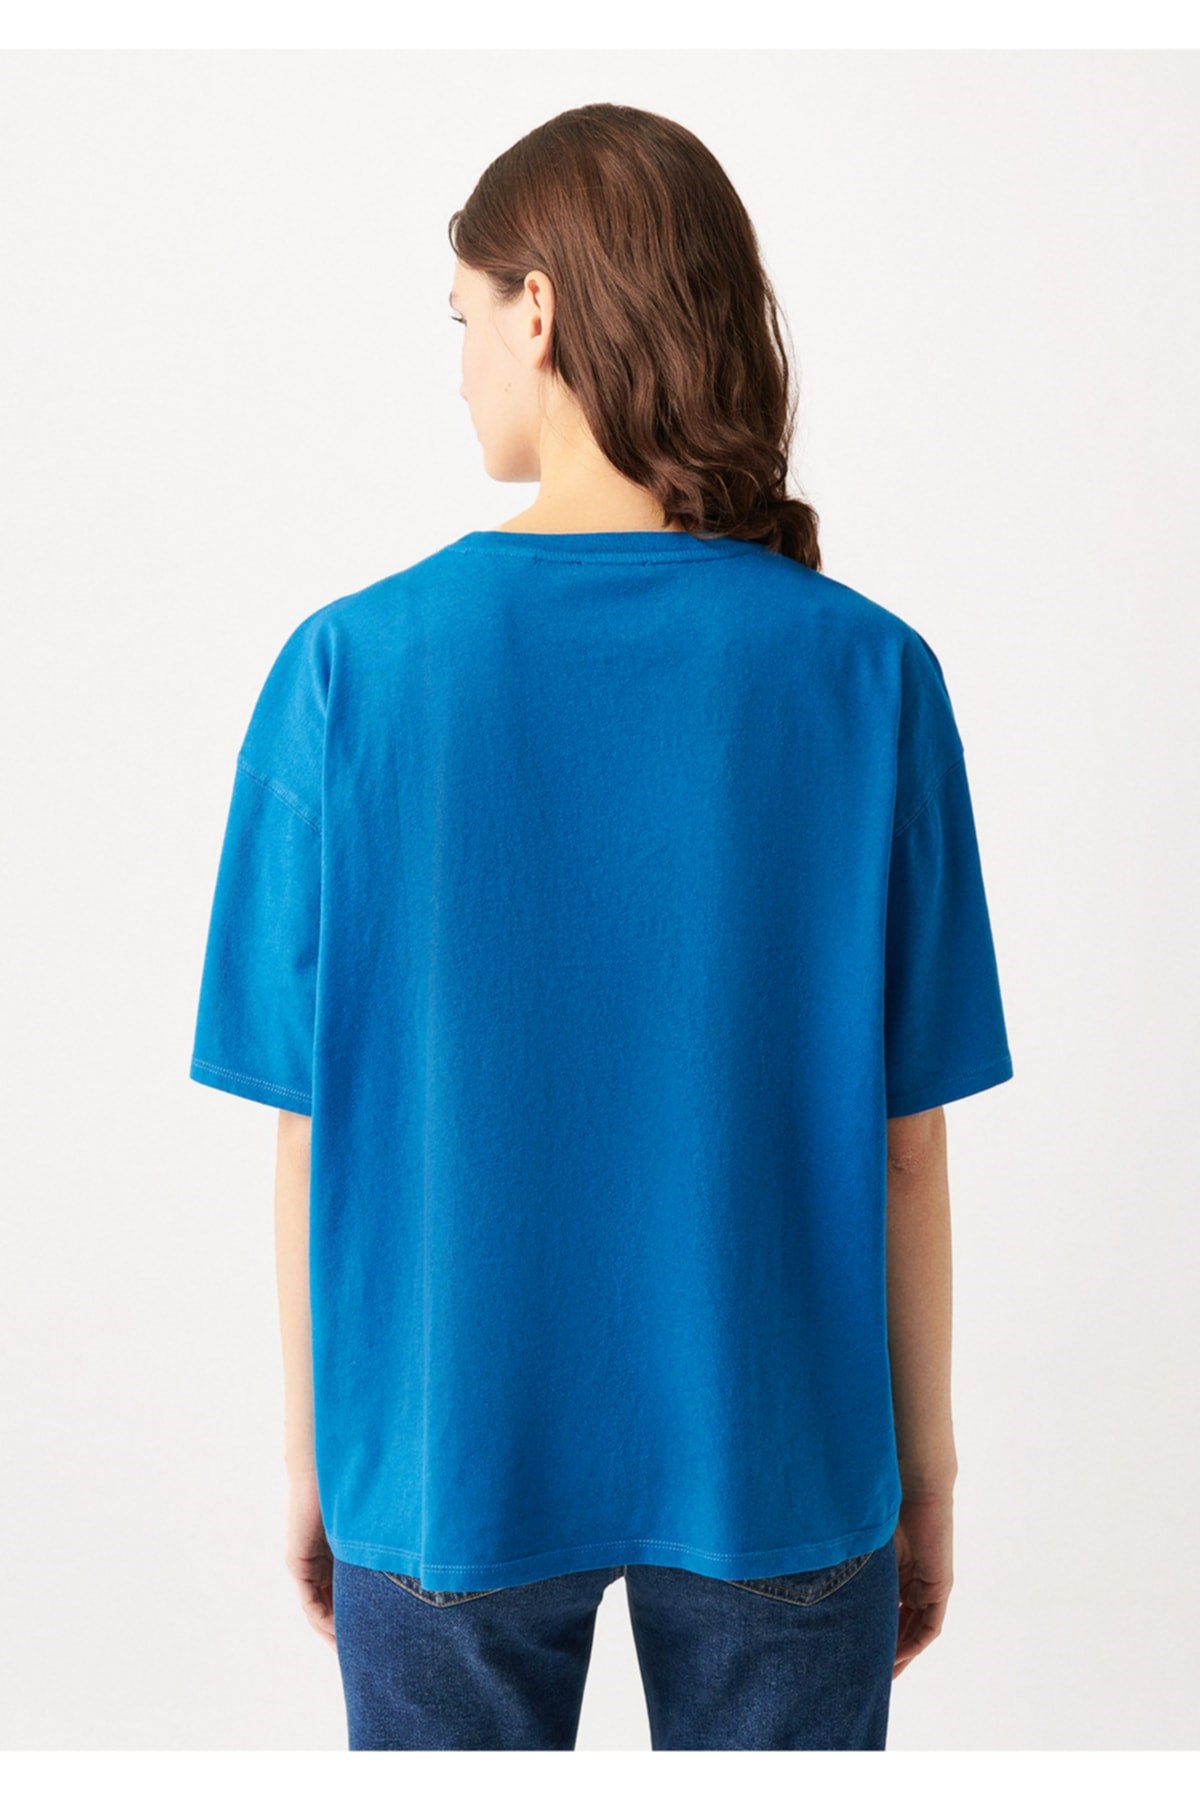 Mavi Jeans Kadın T-Shirt 1610322-80963 